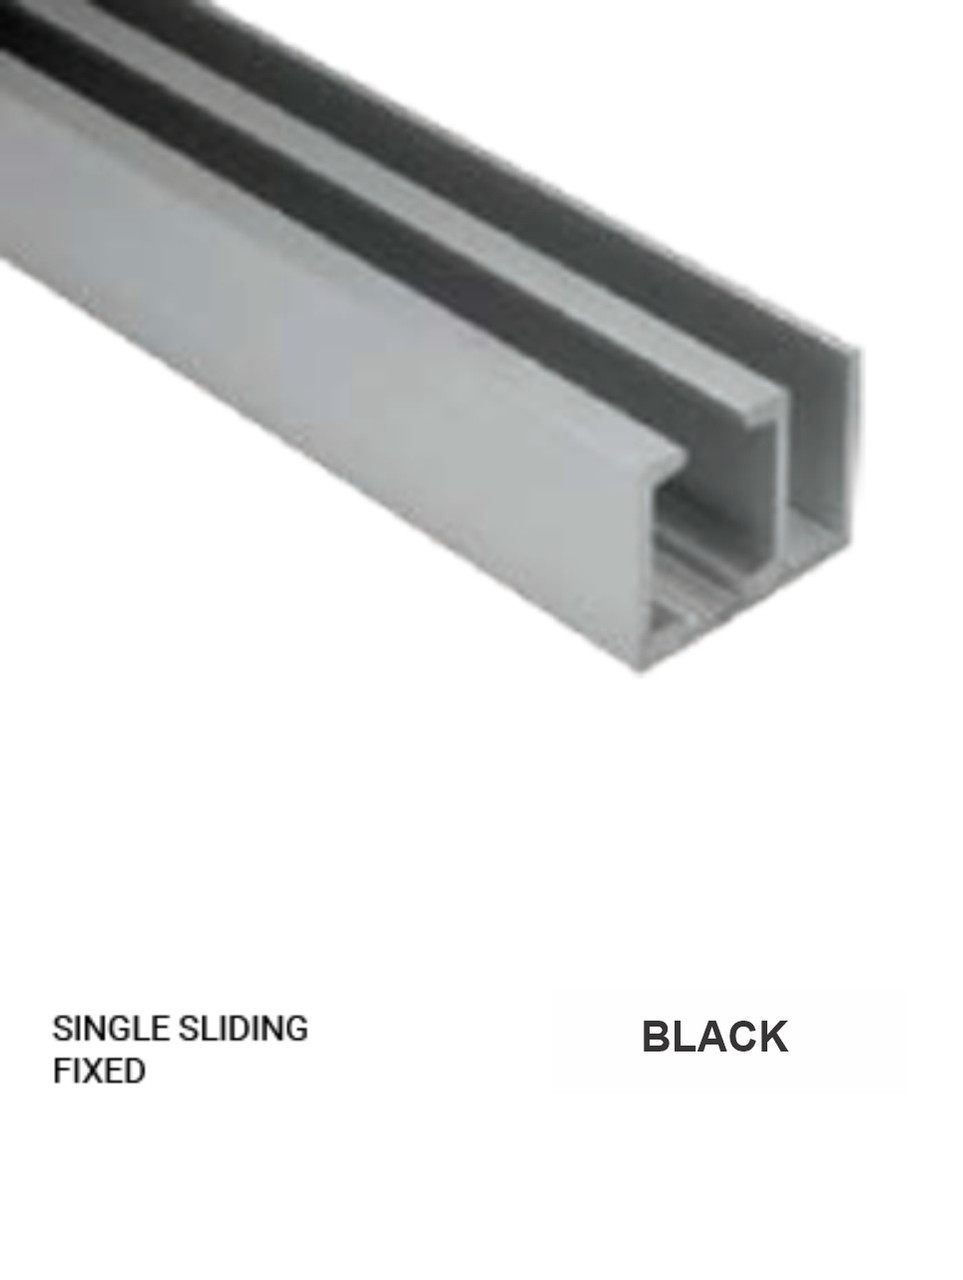 SL012SA-BL Single Sliding Fixed in PC Black